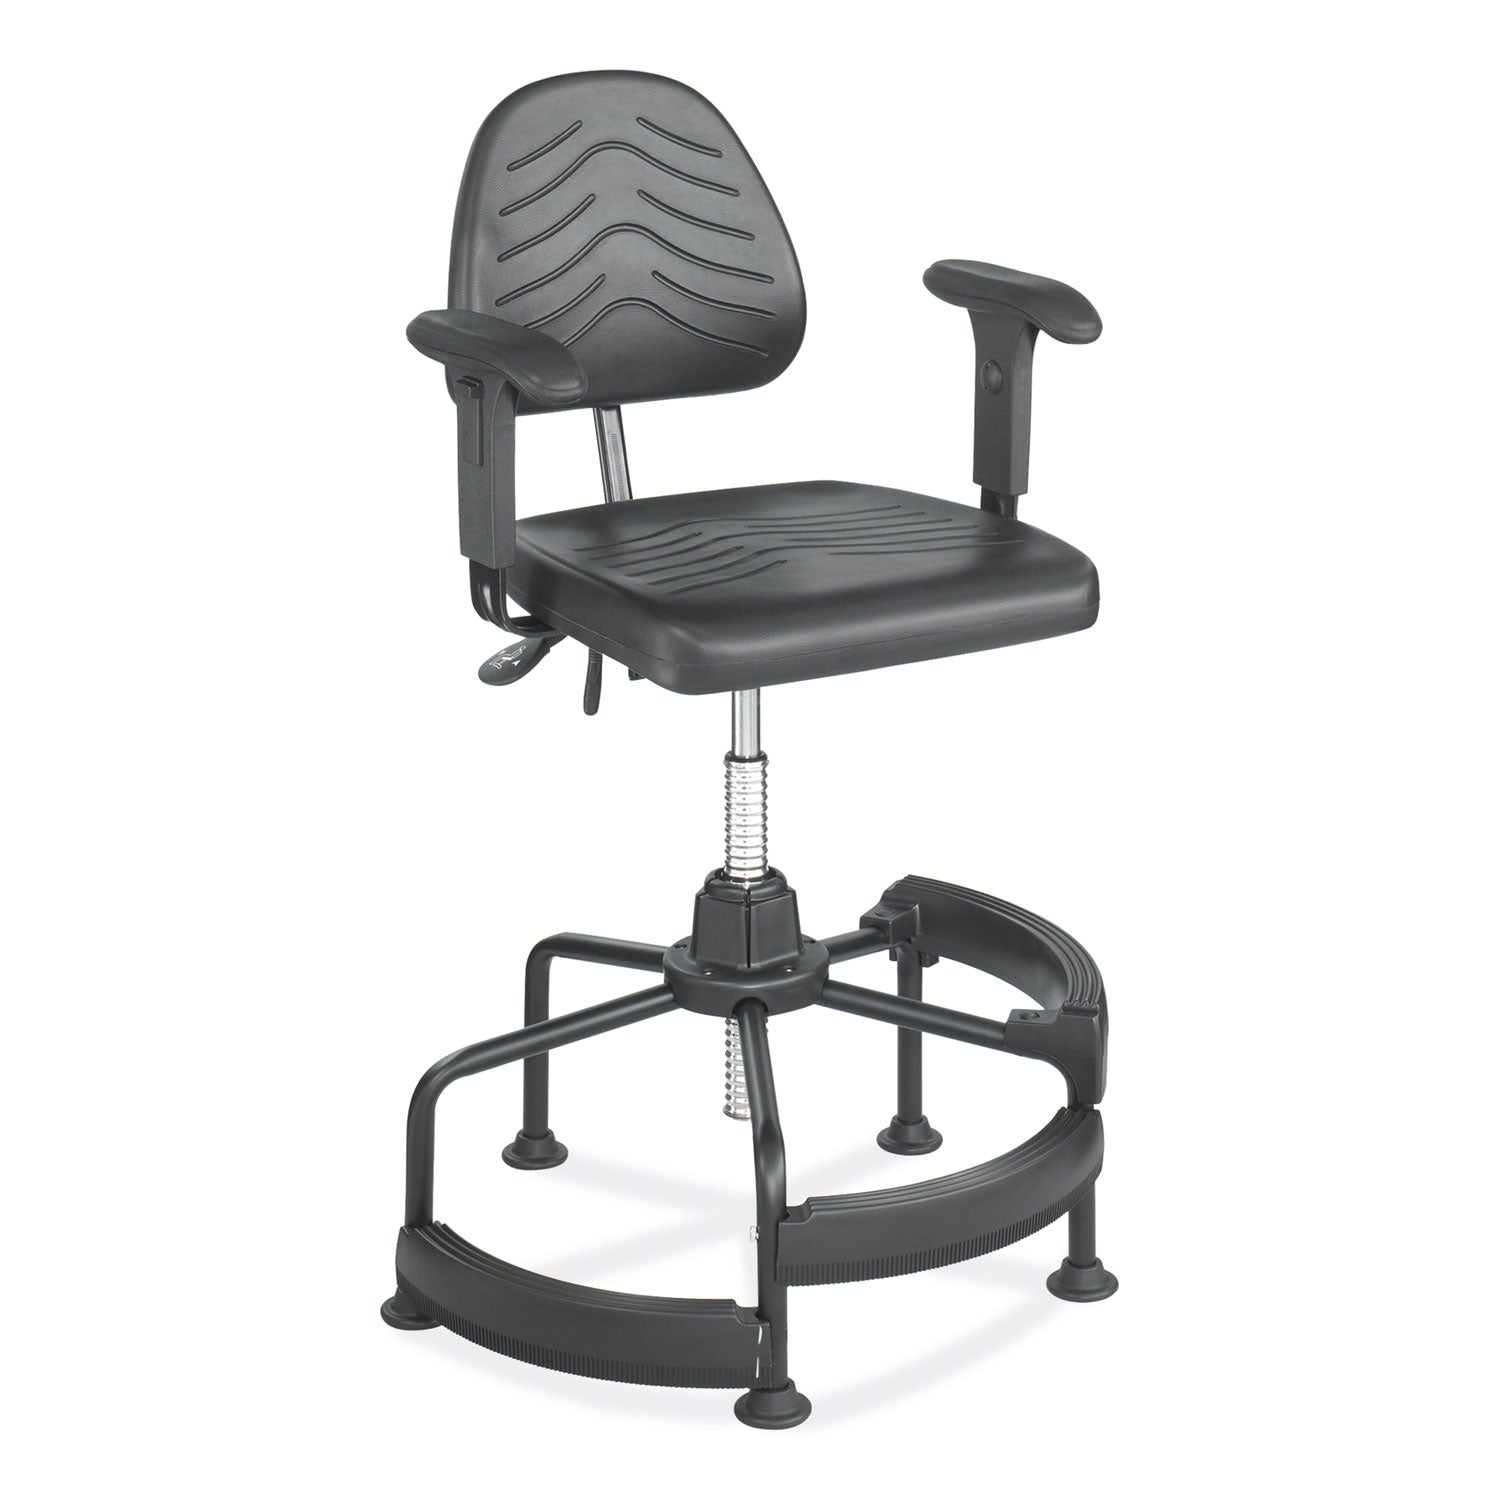 adjustable-t-pad-armrest-for-safco-task-master-series-chairs-3-x-975-x-115-black-2-set-ships-in-1-3-business-days_saf5144 - 1